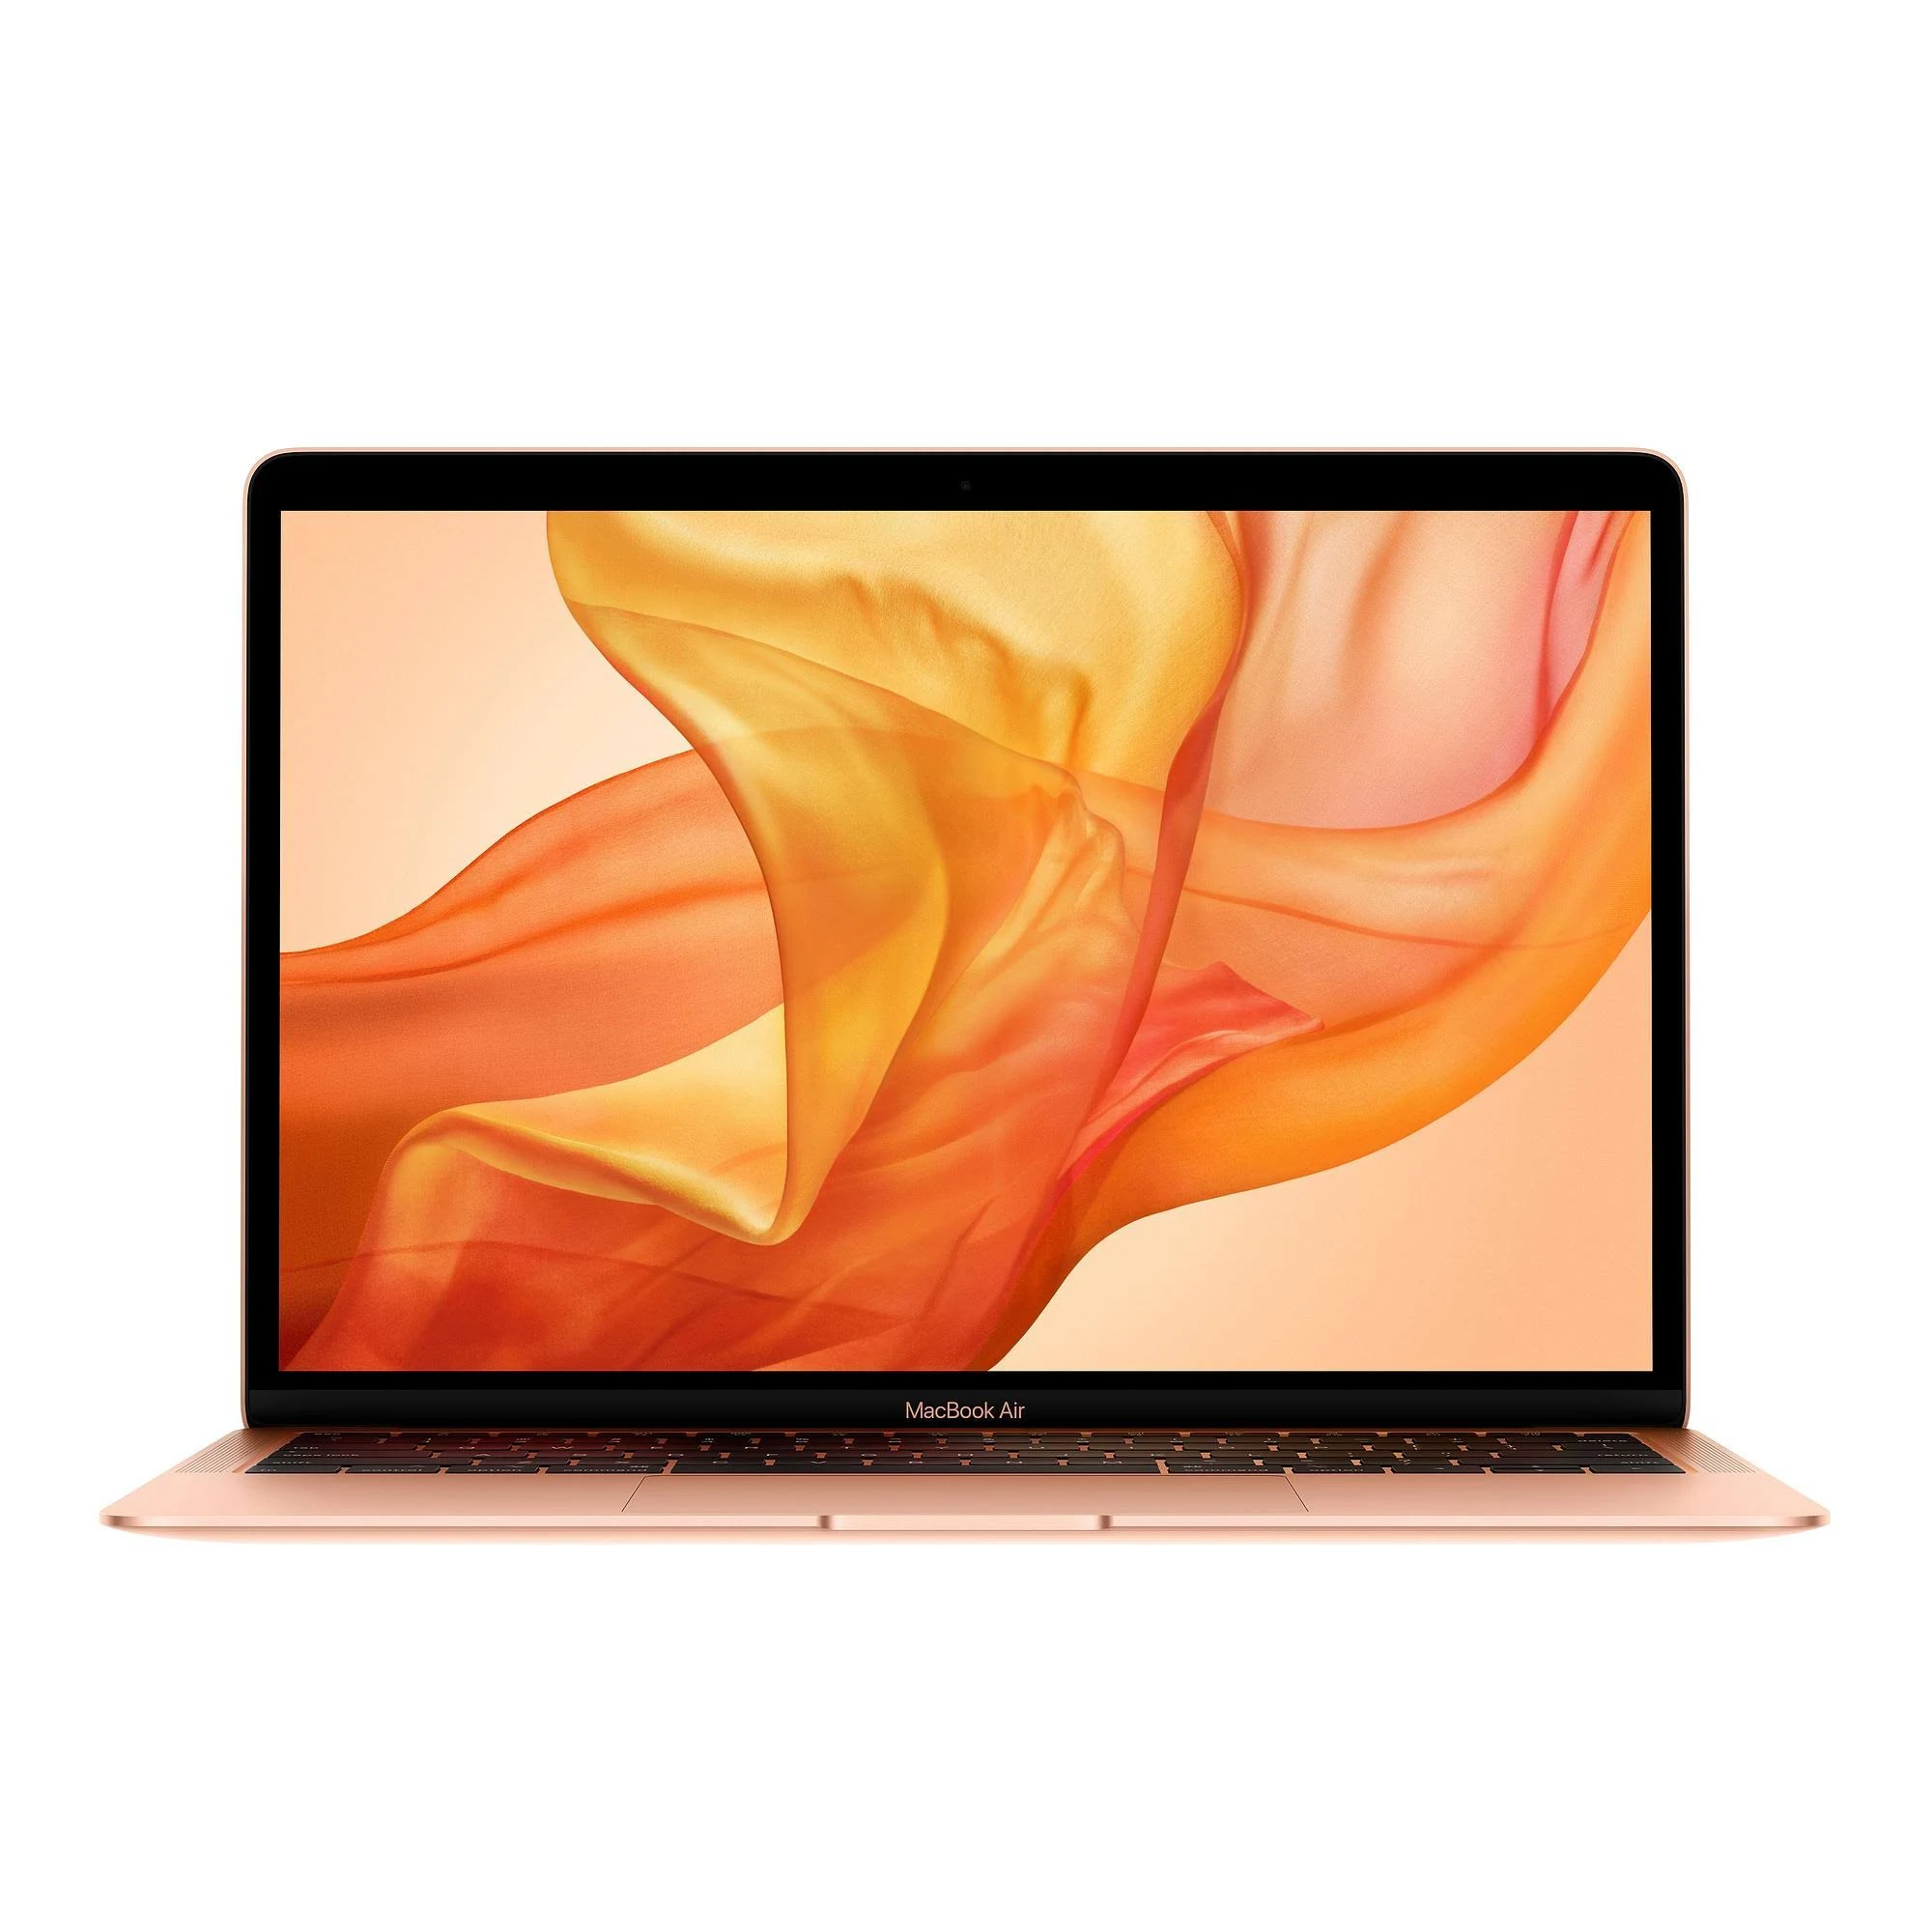 MacBook Air 13 inch 2020 Core i3 1.1GHz - 256GB SSD - 8GB Ram 256GB Gold Very Good